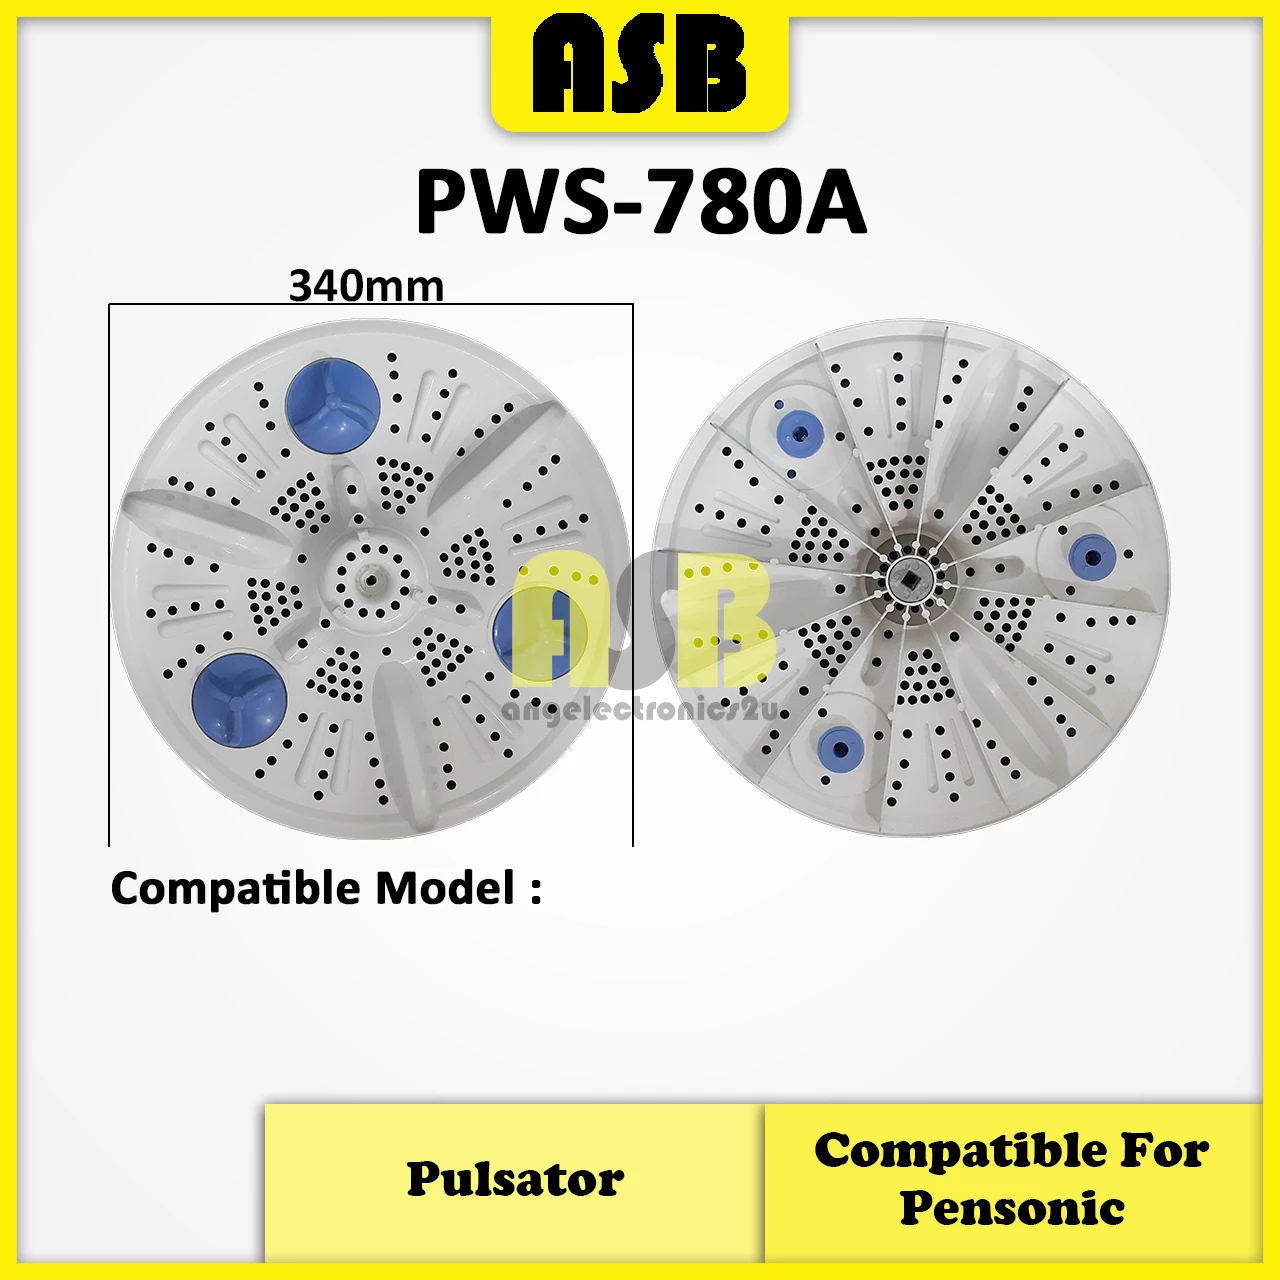 (1pc) ( Compatible : PENSONIC ) Washing Machine Pulsator